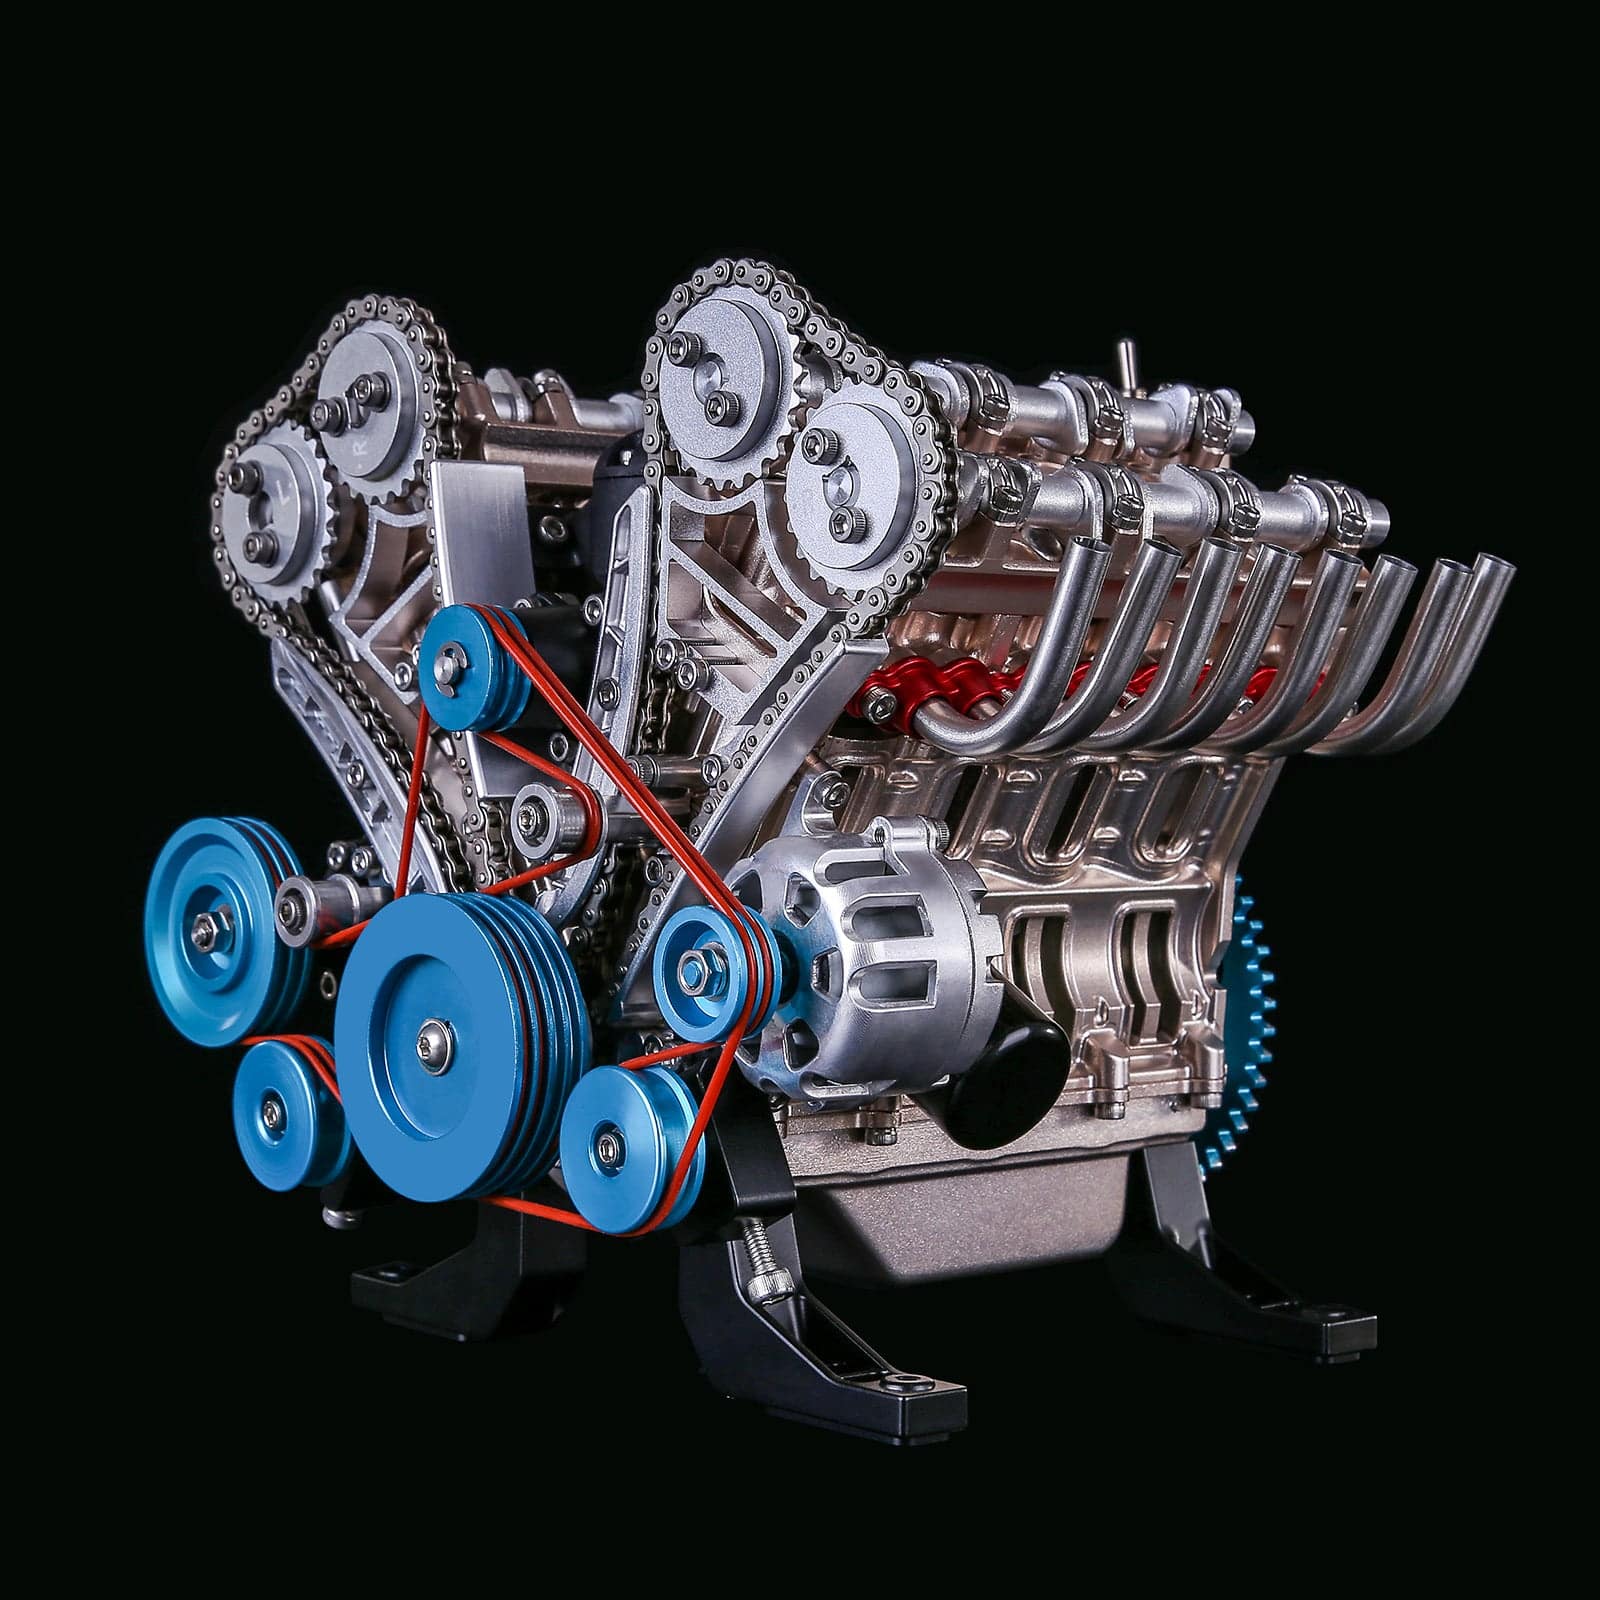 Teching V8 Mechanical Metal Assembly DIY Car Engine Model Kit 500+Pcs Educational Experiment Toy - stirlingkit